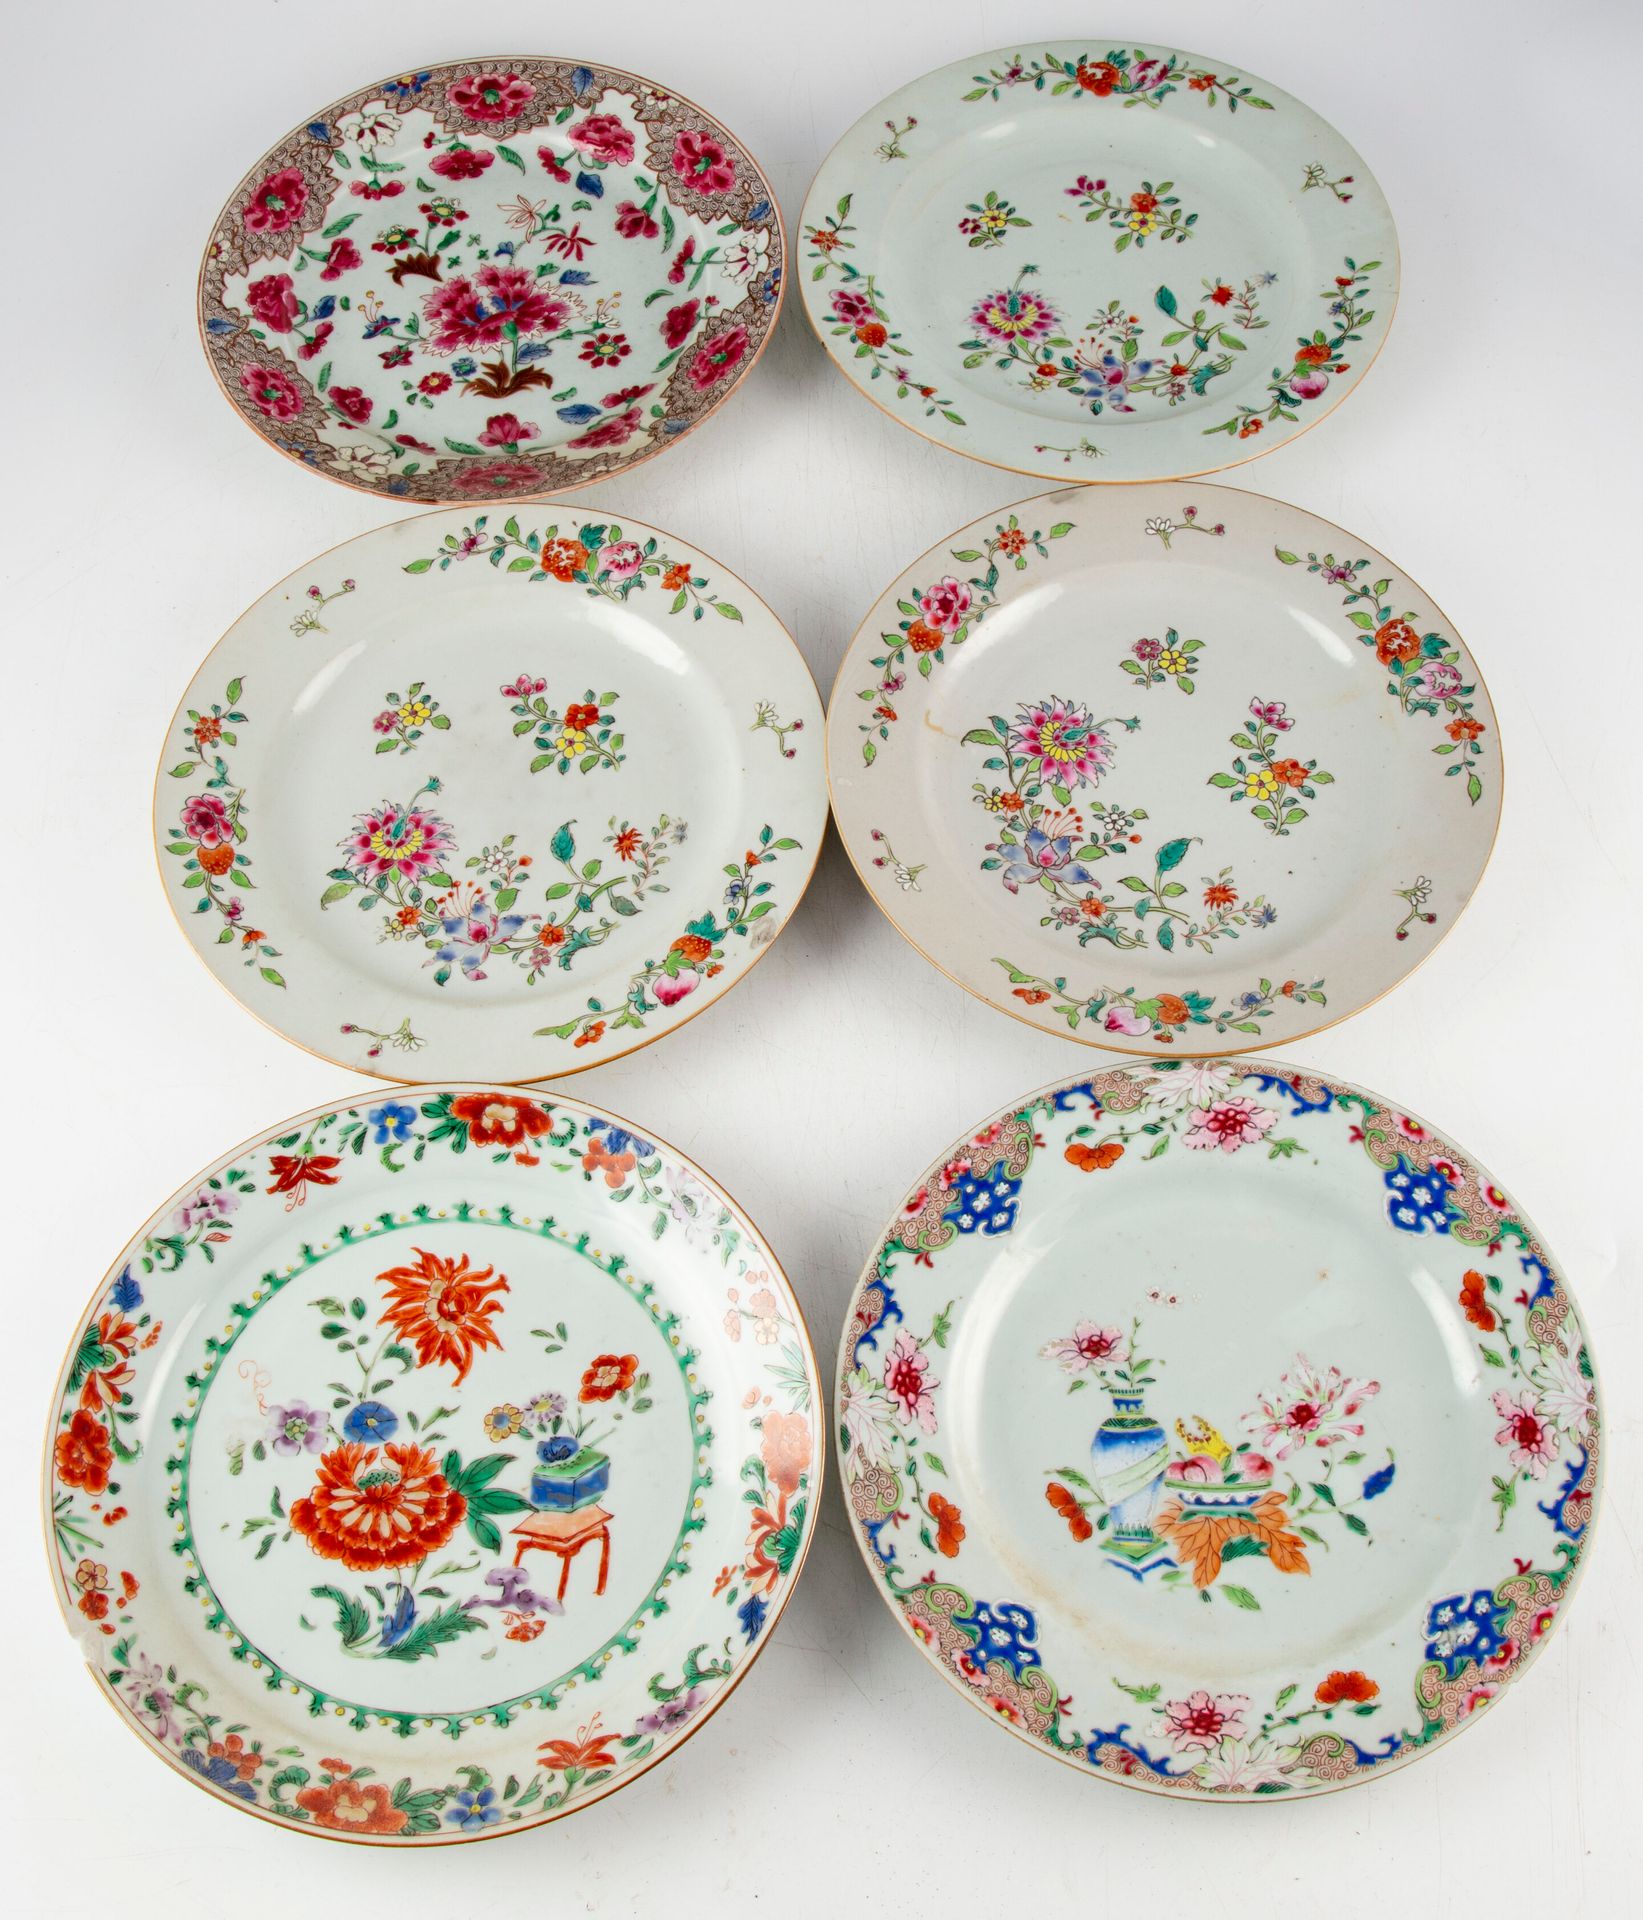 COMPAGNIE DES INDES 中国 - 印度公司
花卉或器皿多色装饰瓷盘一套六件
D.23厘米
小缺口和裂缝